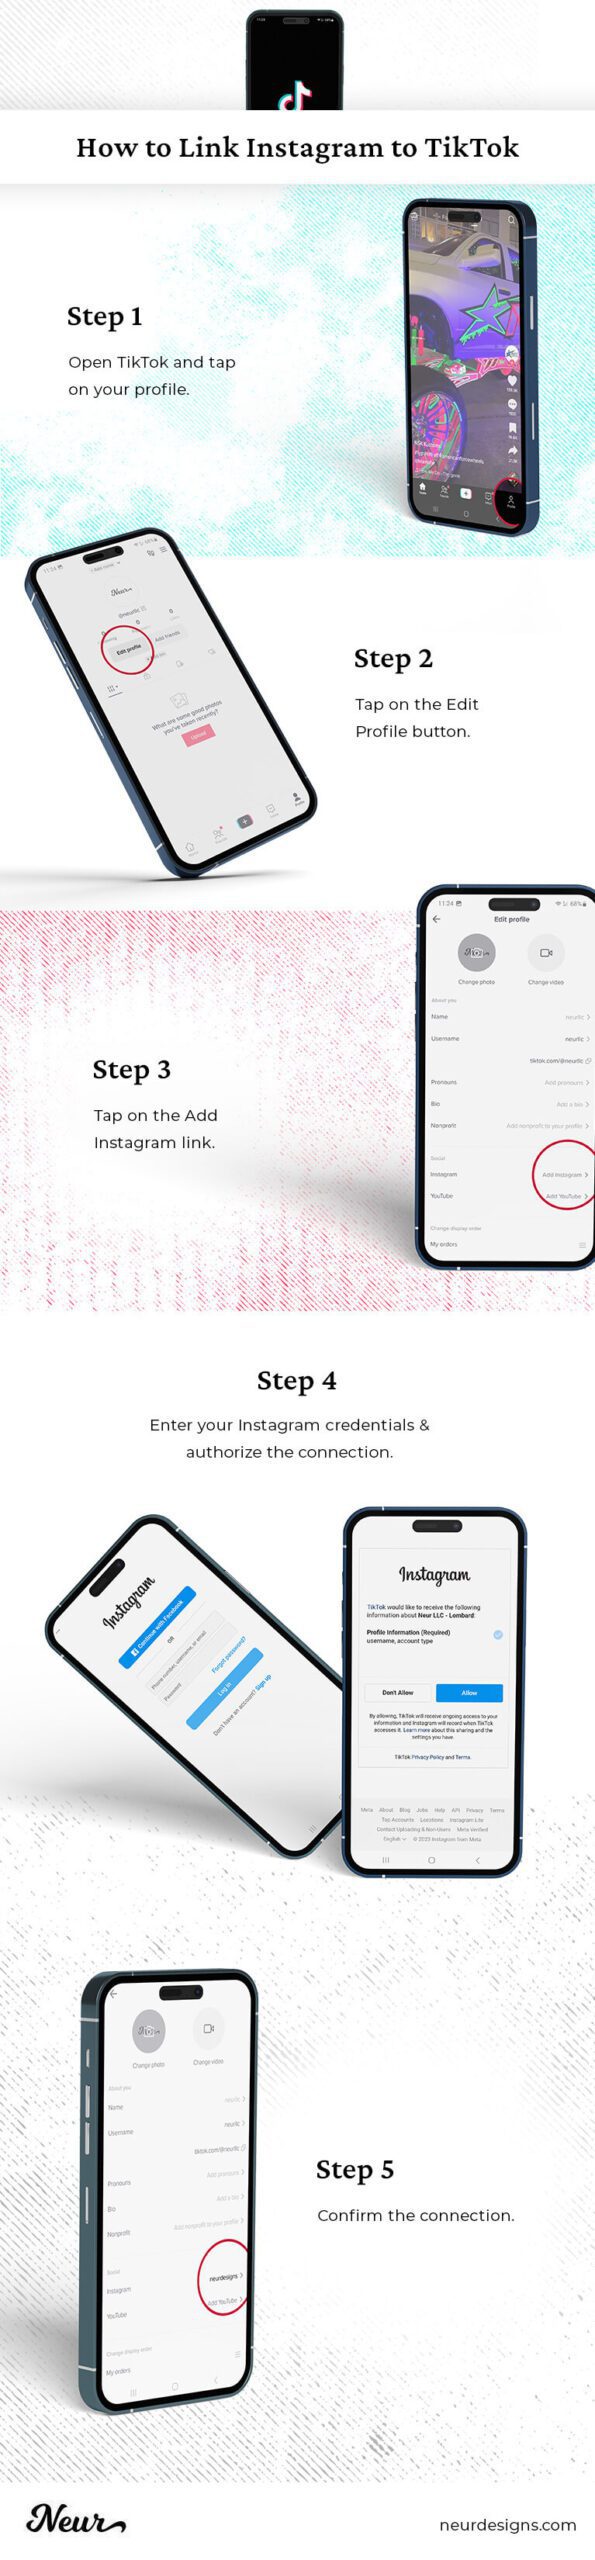 How to link Instagram to TikTok infographic